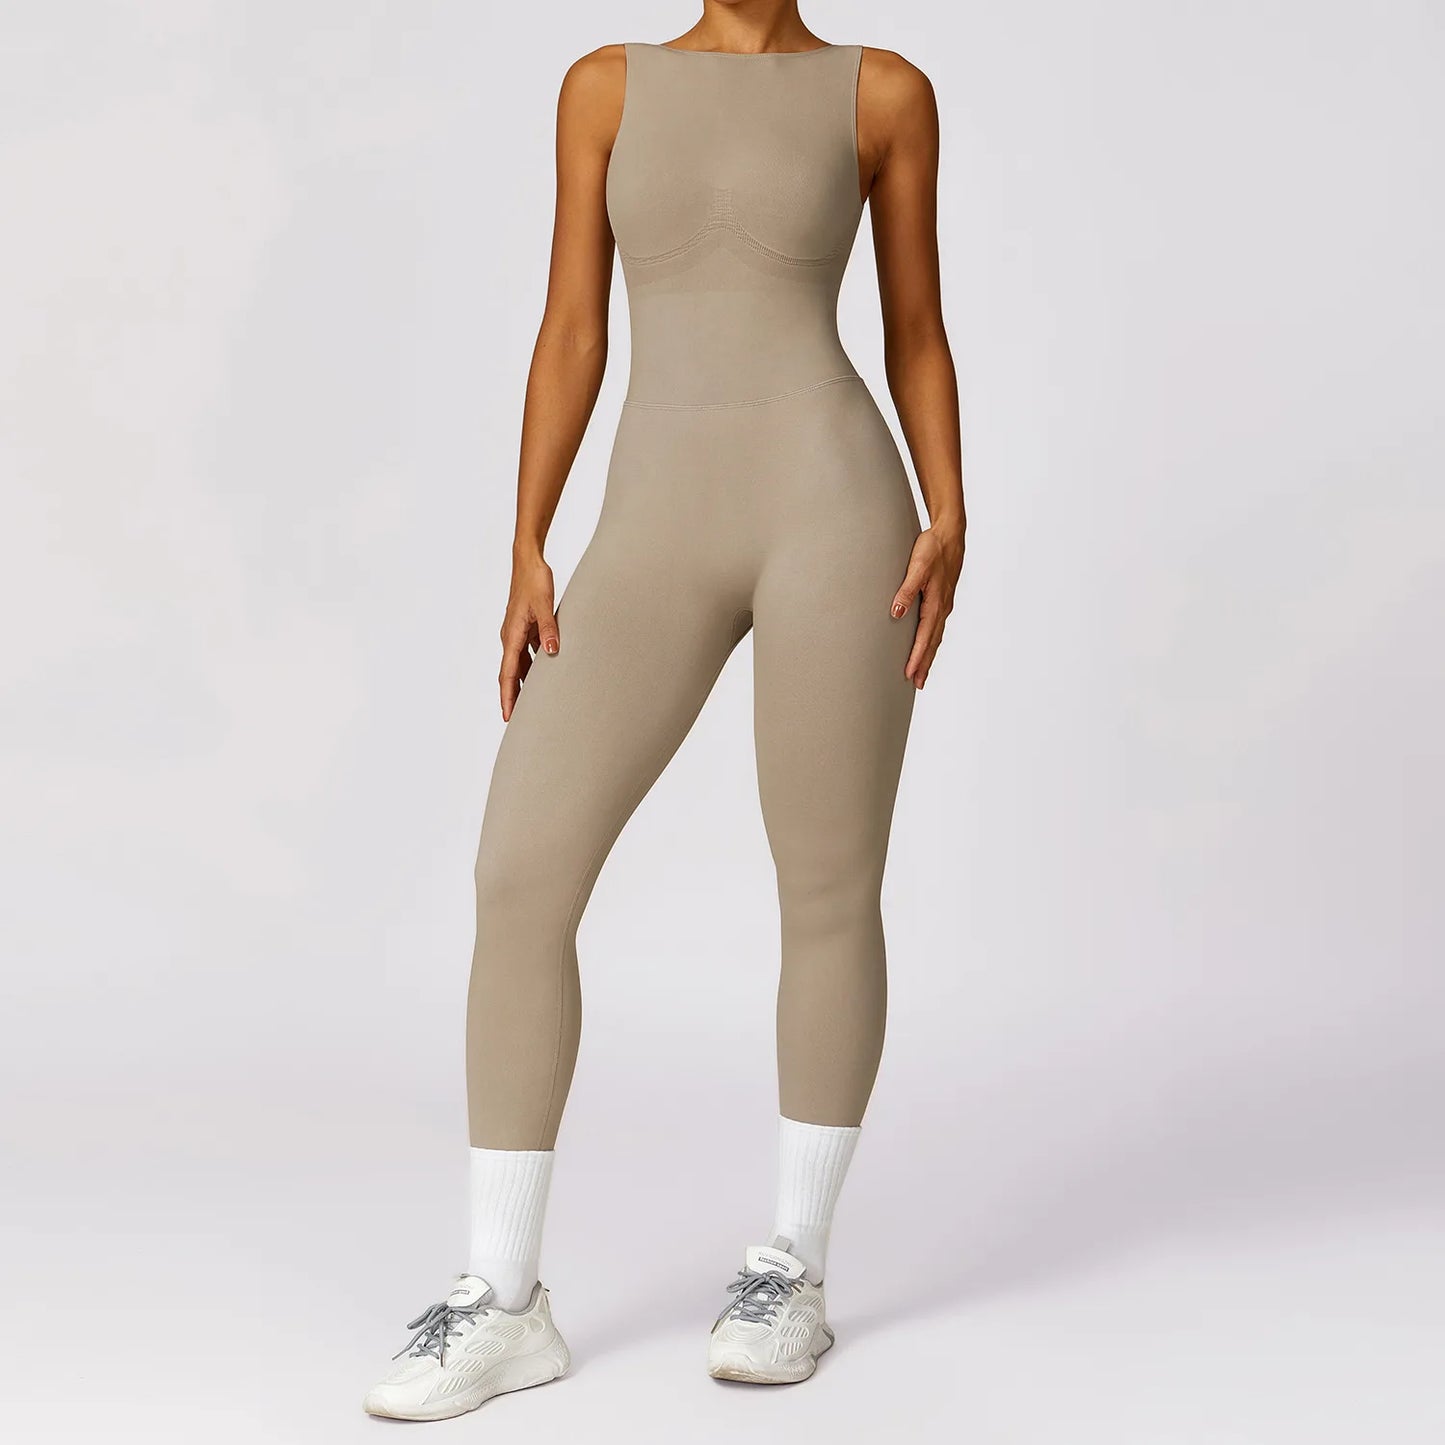 Seamless Fitness Sports Jumpsuit: Women's Gym Athletic Wear Set Yoga Shop 2018